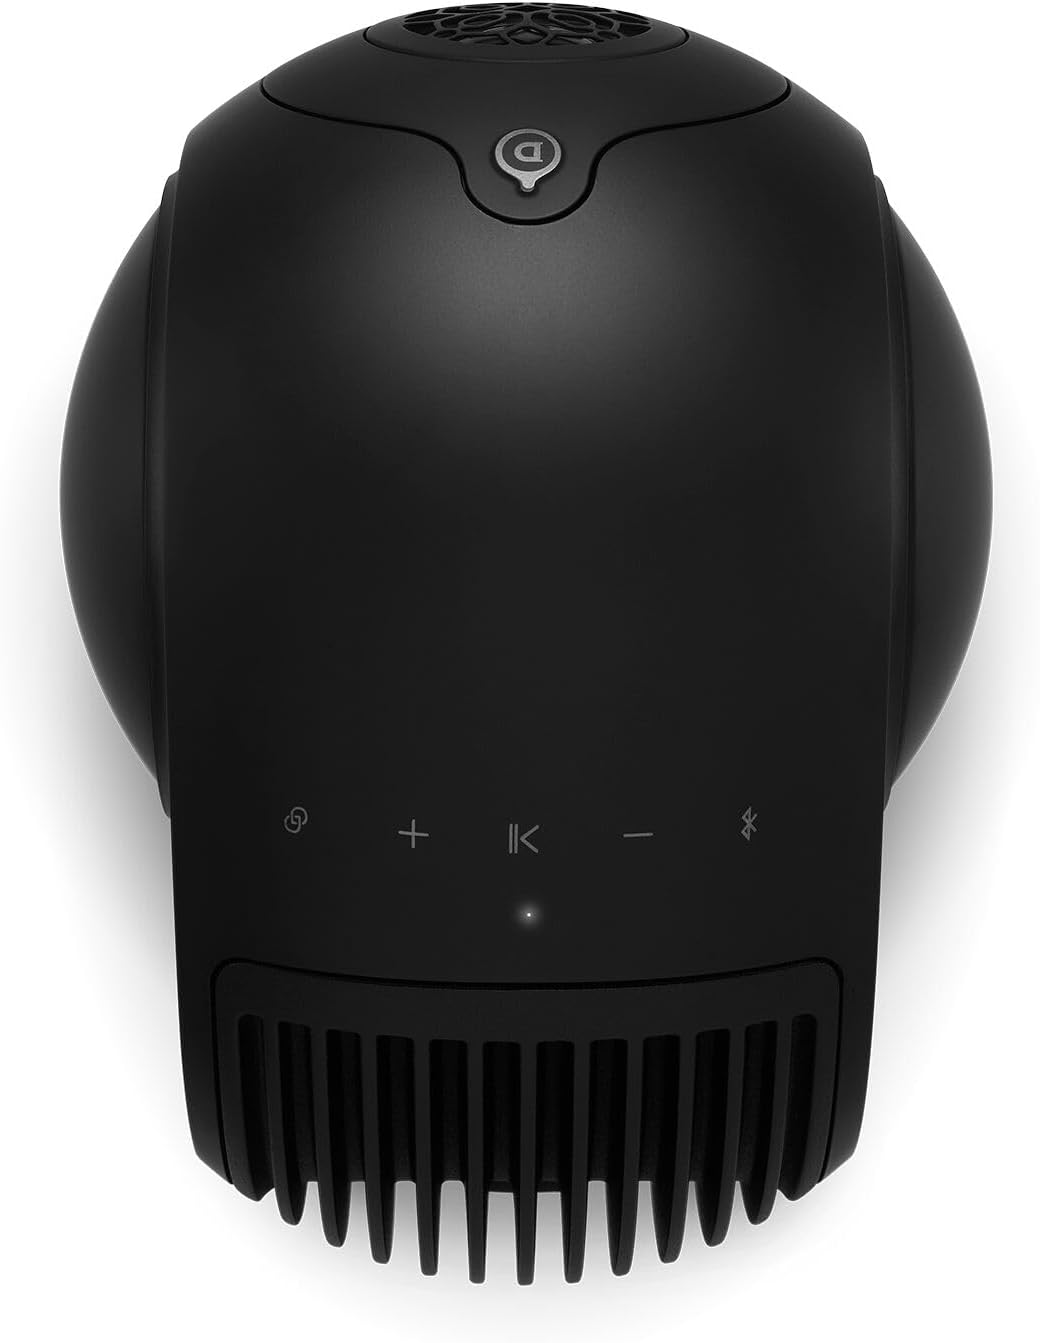 Devialet Phantom II 95db Wireless Speaker - Matte Black - Pristine